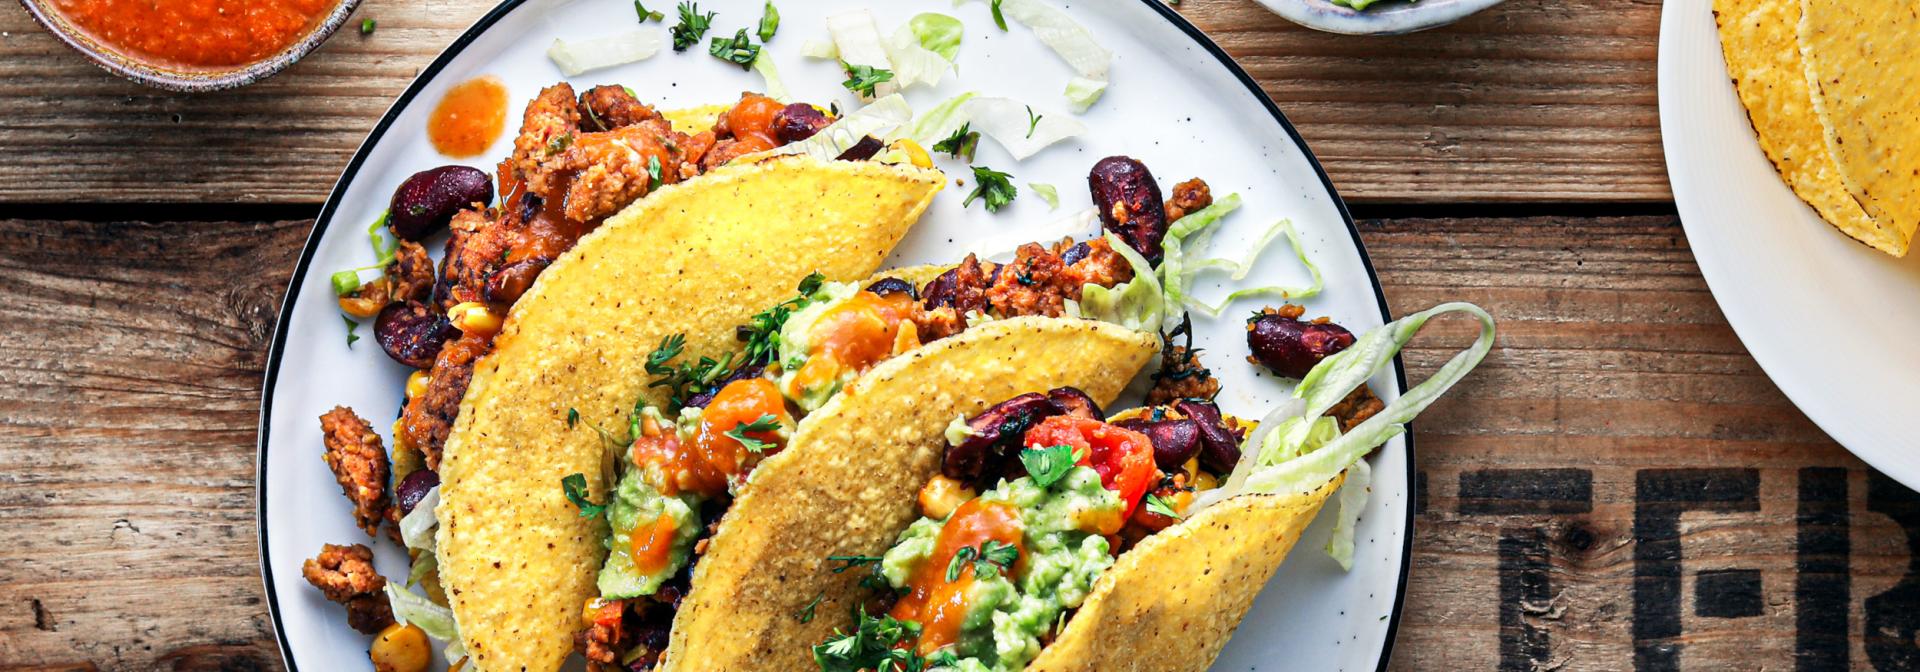 Vegane Tacos mit Sensational Hack